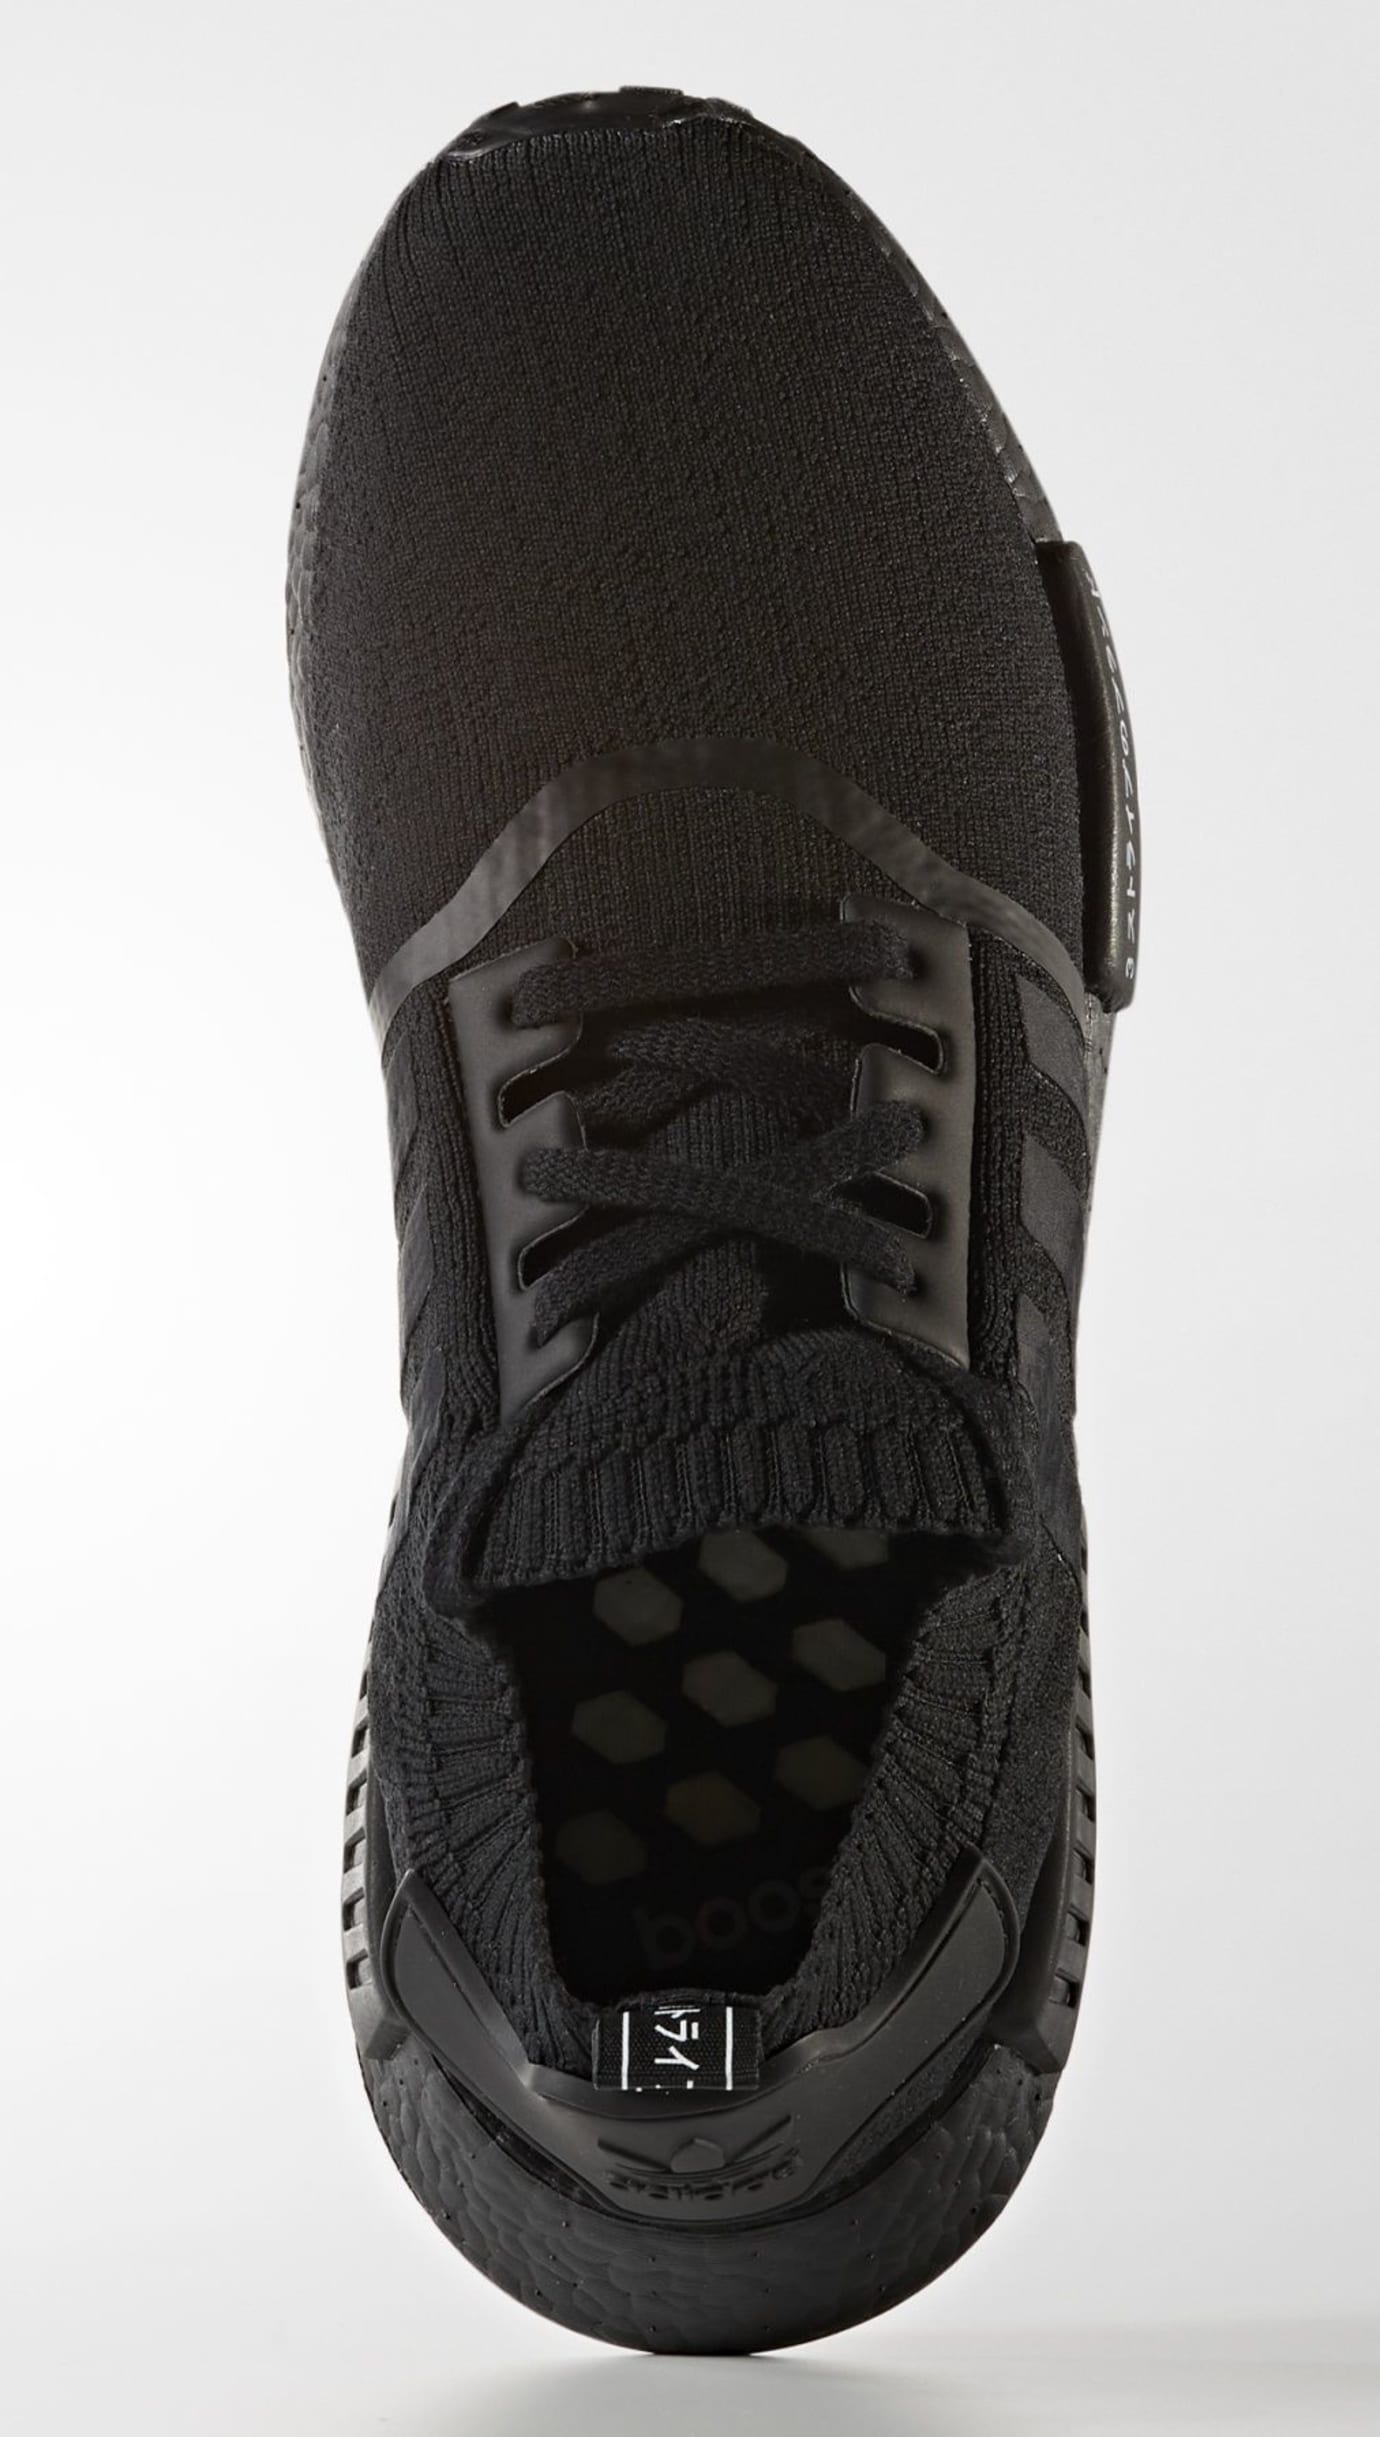 Adidas NMD_R1 Primeknit 'Japan Release Date,'Triple White': 'Triple Black': BZ0220 Sole Collector